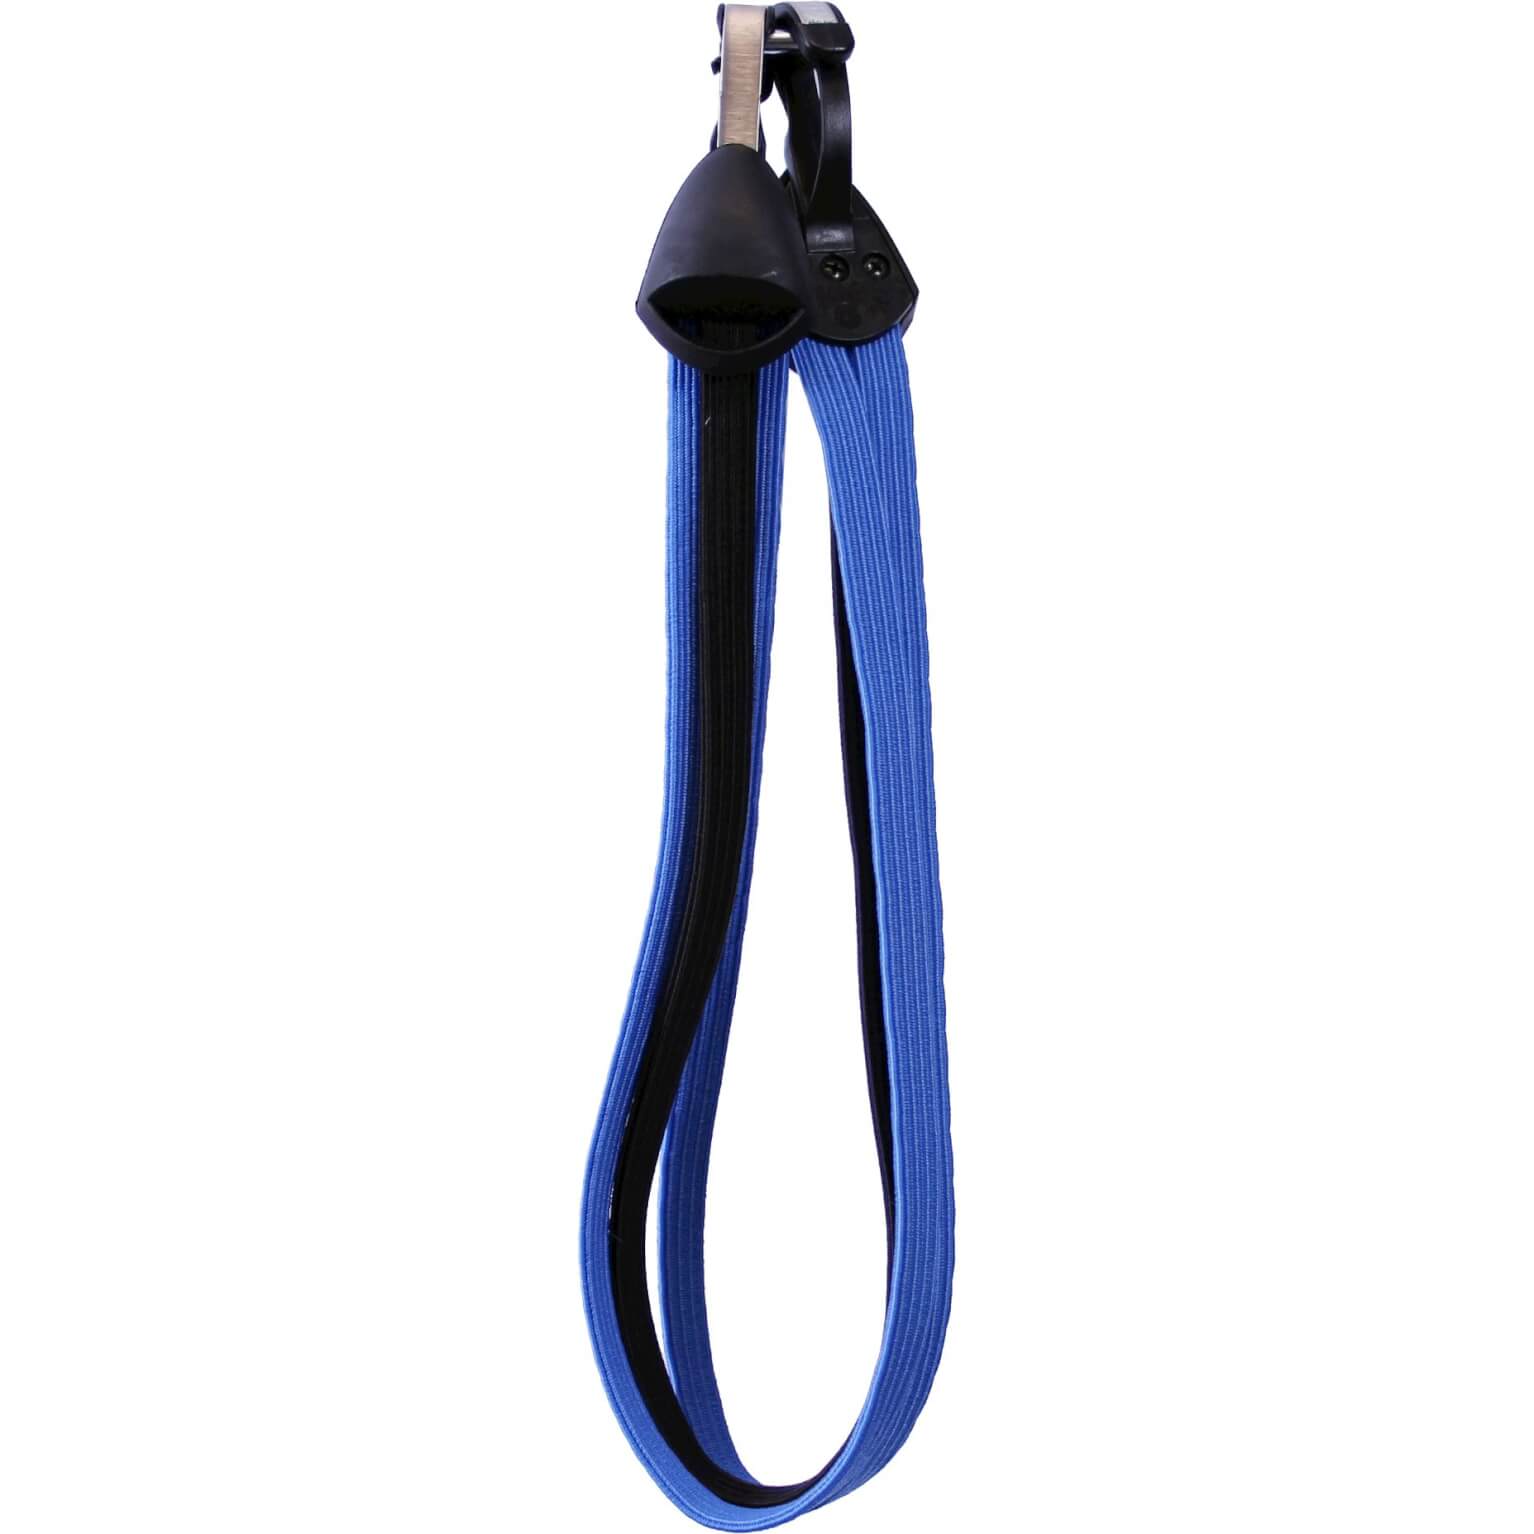 Widek Safety Tie Stainless Steel 26/28" bright blue/black uni